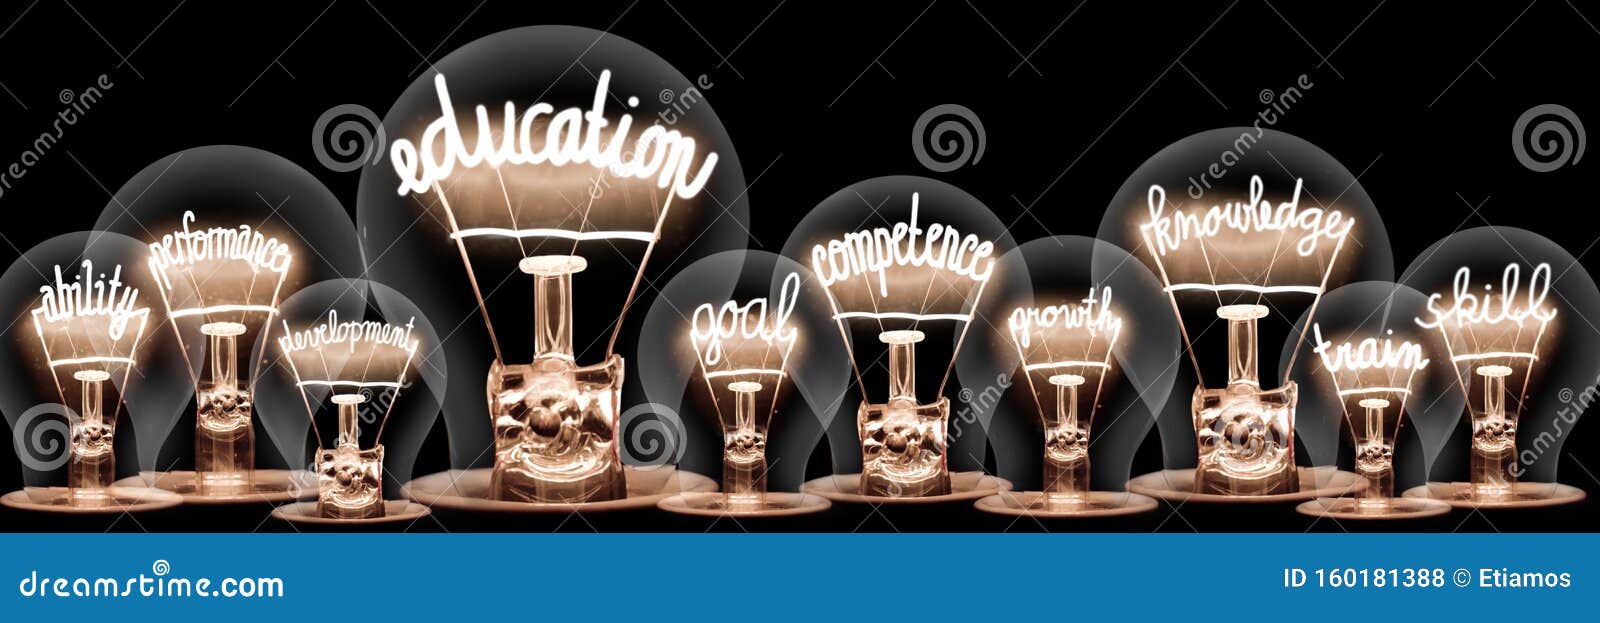 light bulbs with education concept